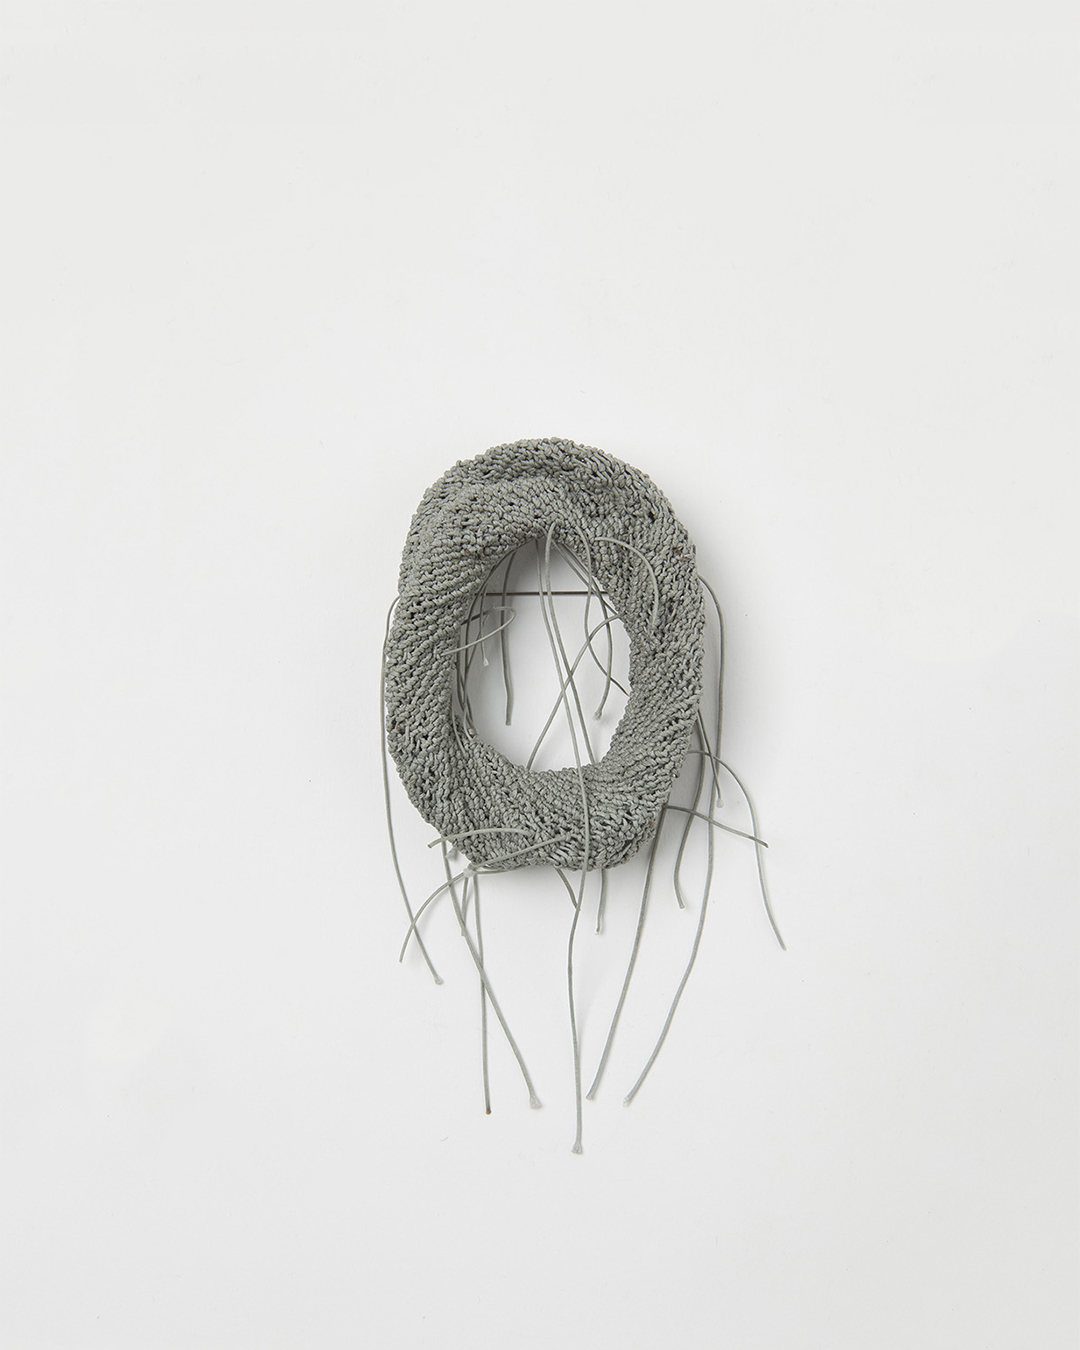 Barbara Schrobenhauser, Grey Net, 2018, brooch; string, silver, stainless steel, 80 x 60 x 20 mm, €1650